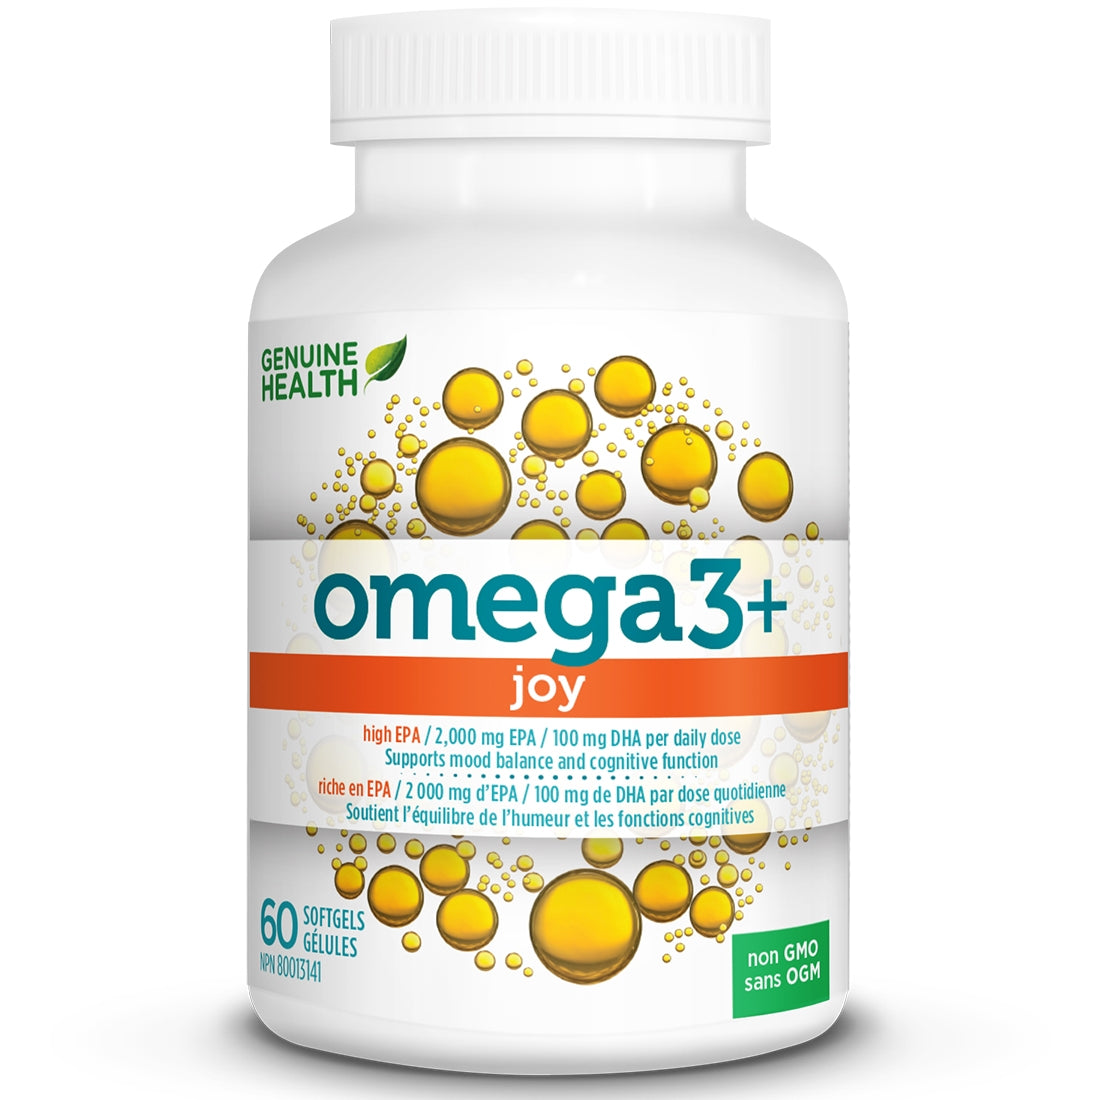 Genuine Health Omega3+, Joy Capsules